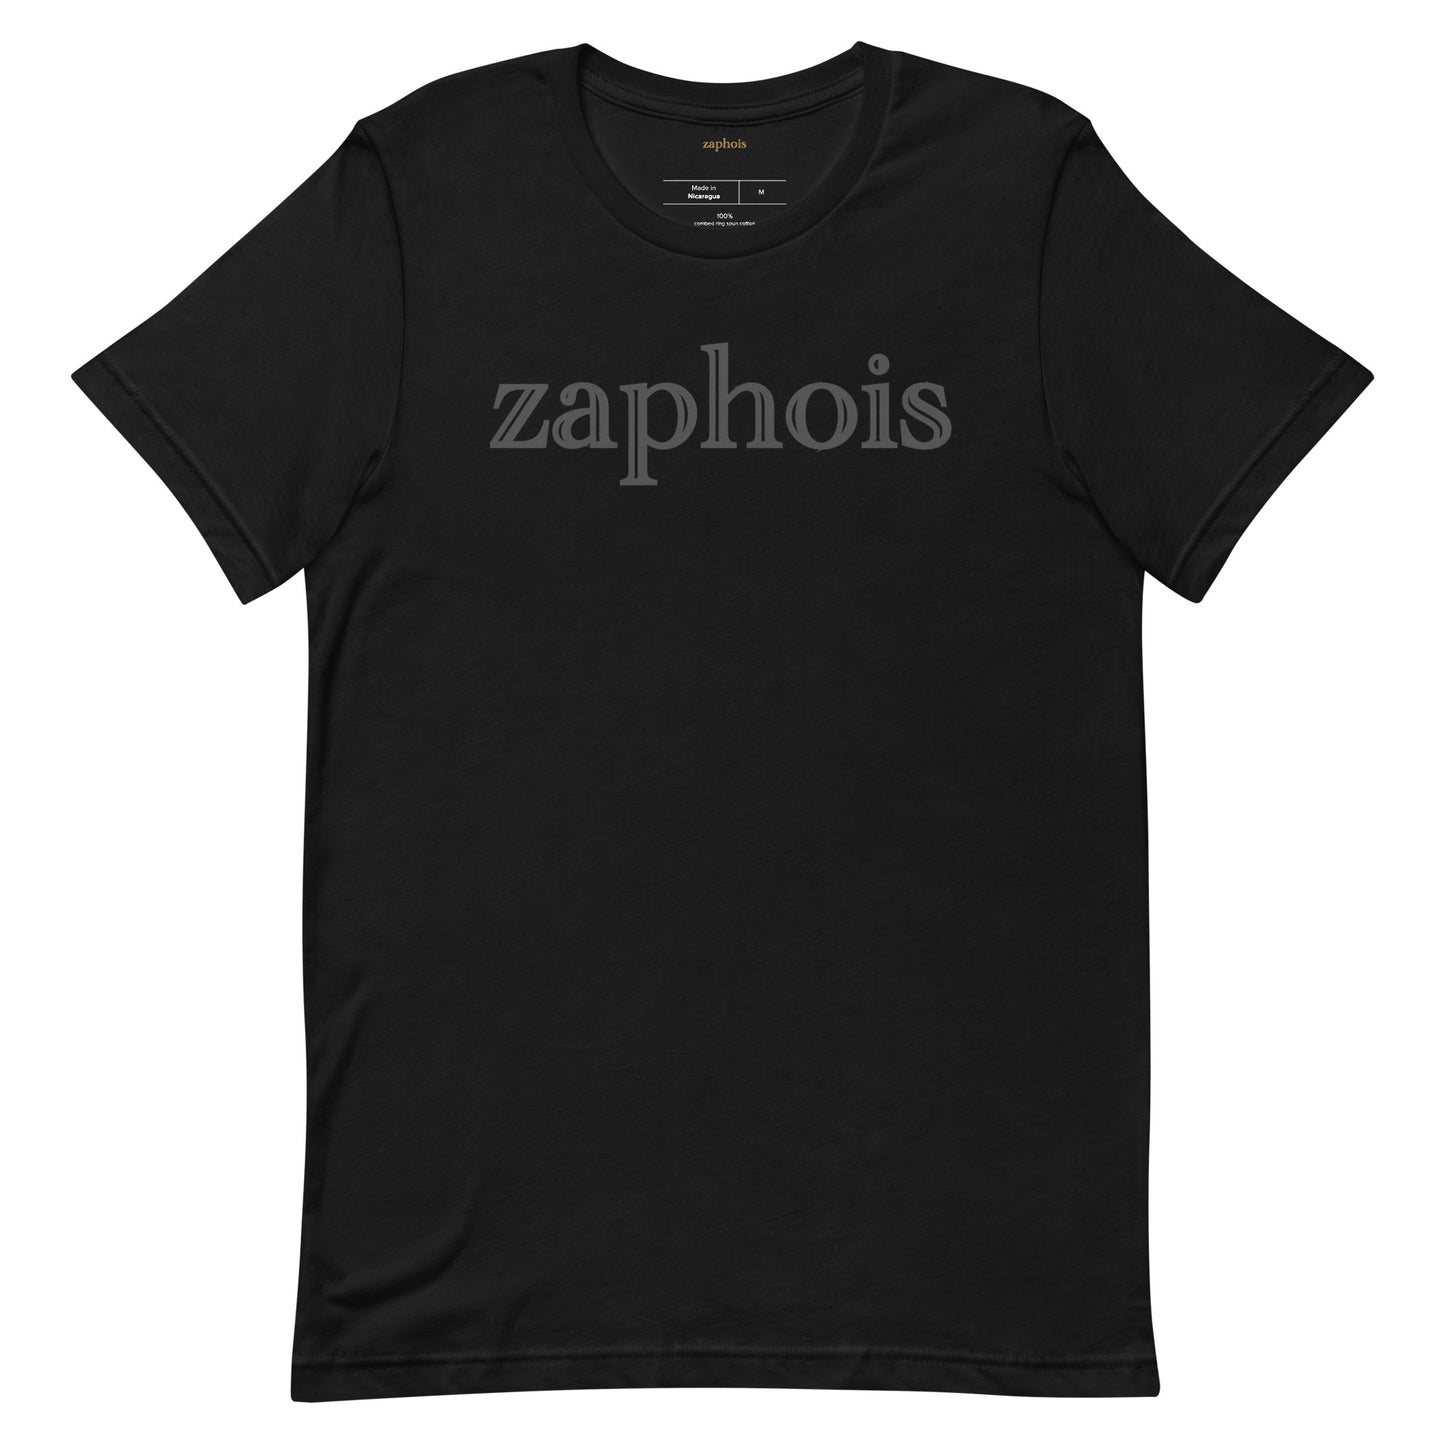 zaphois dark diamond shirt